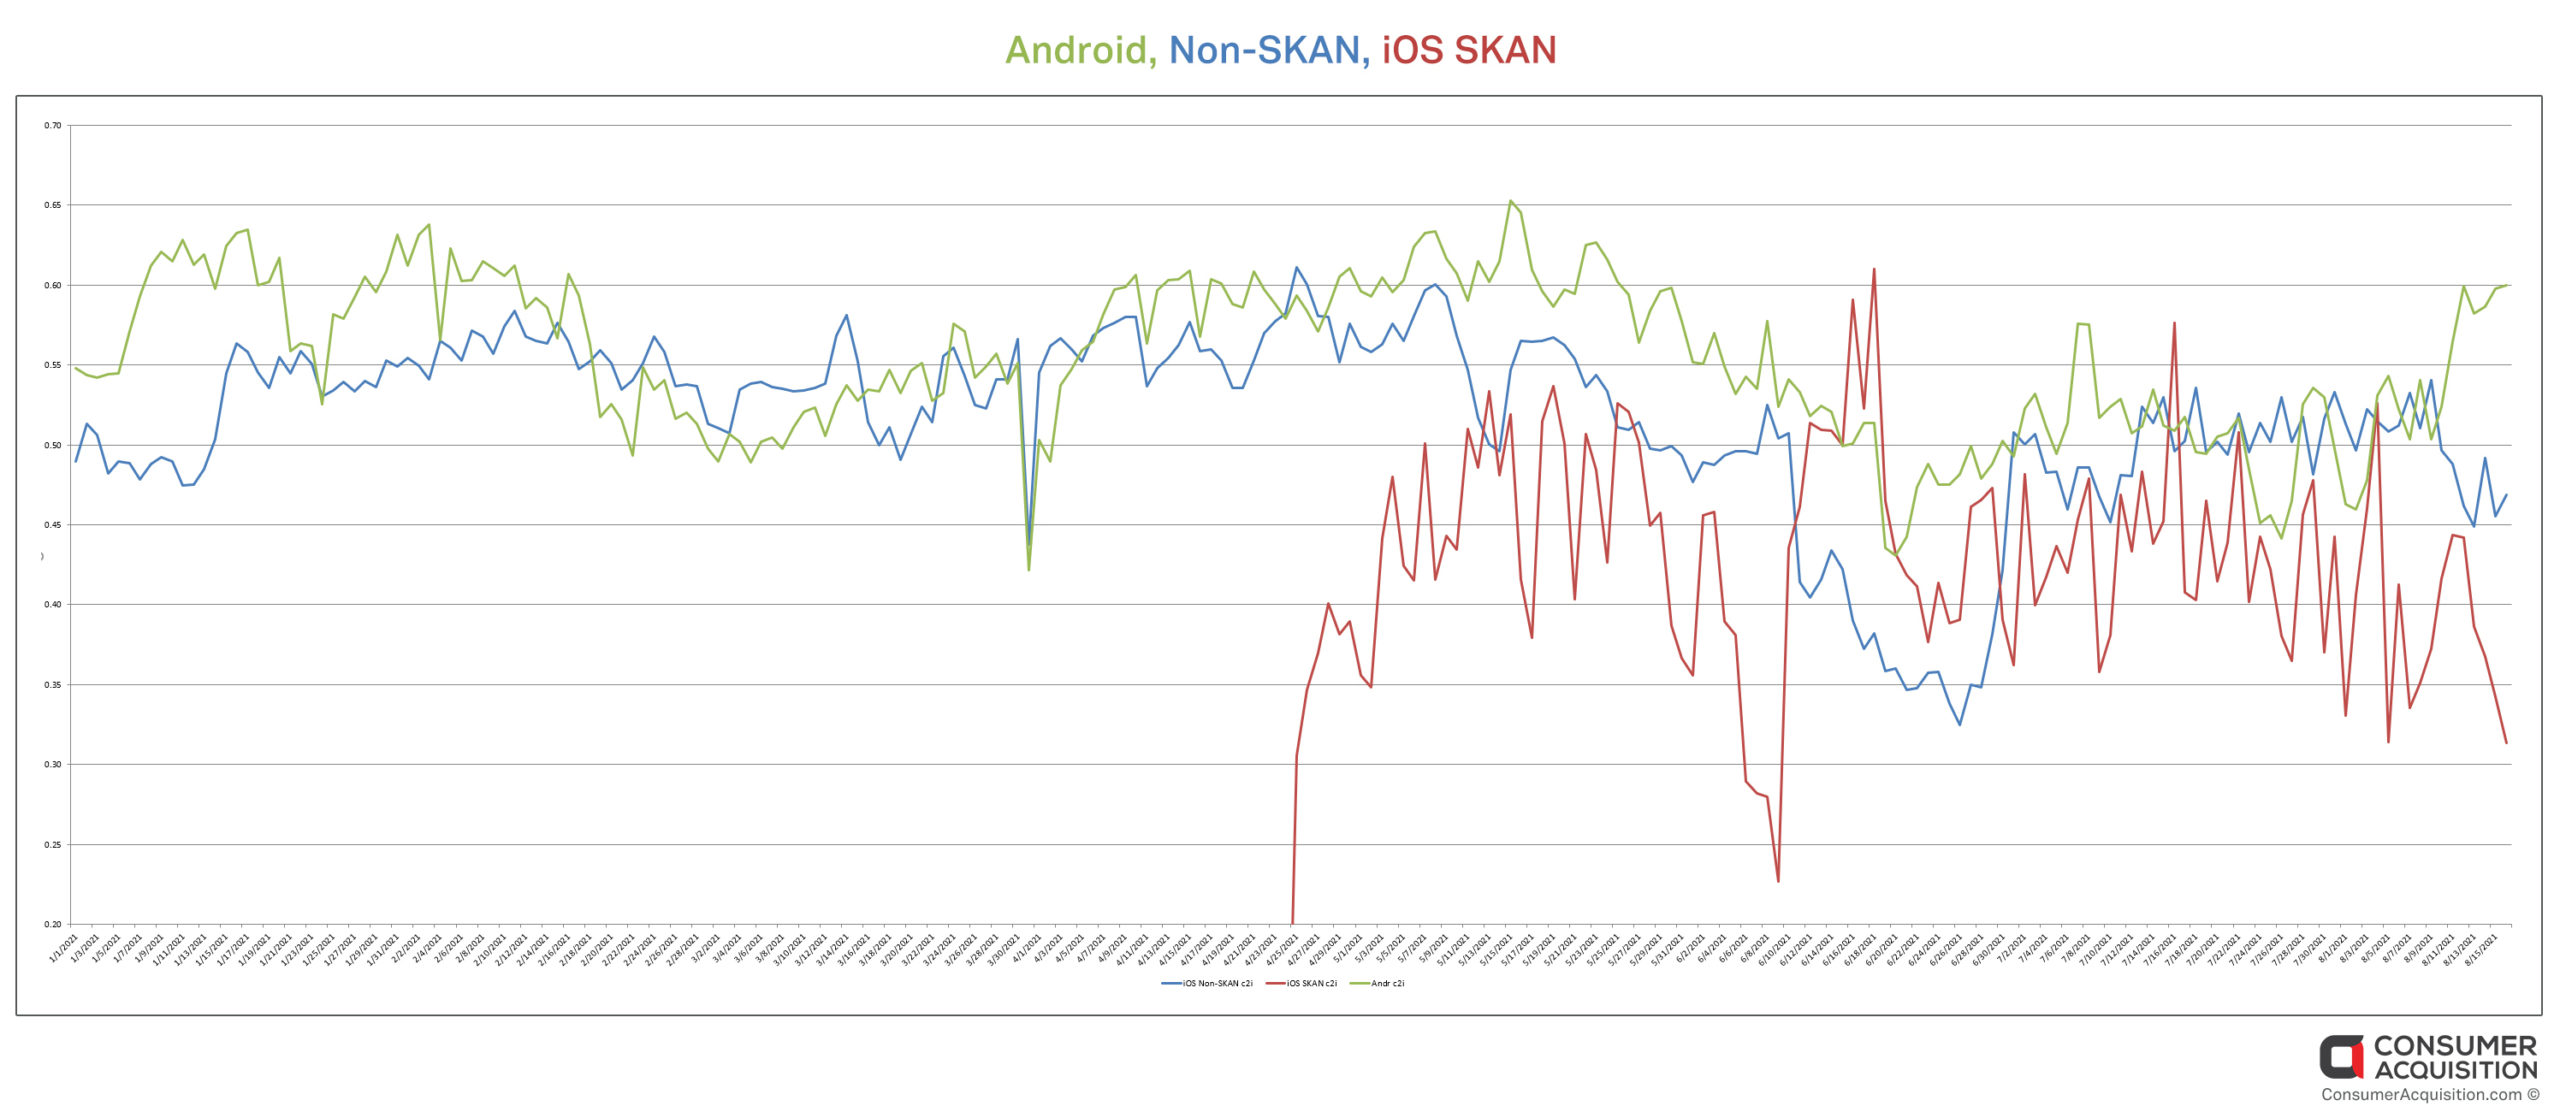 Android vs iOS Non-SKAN vs iOS SKAN